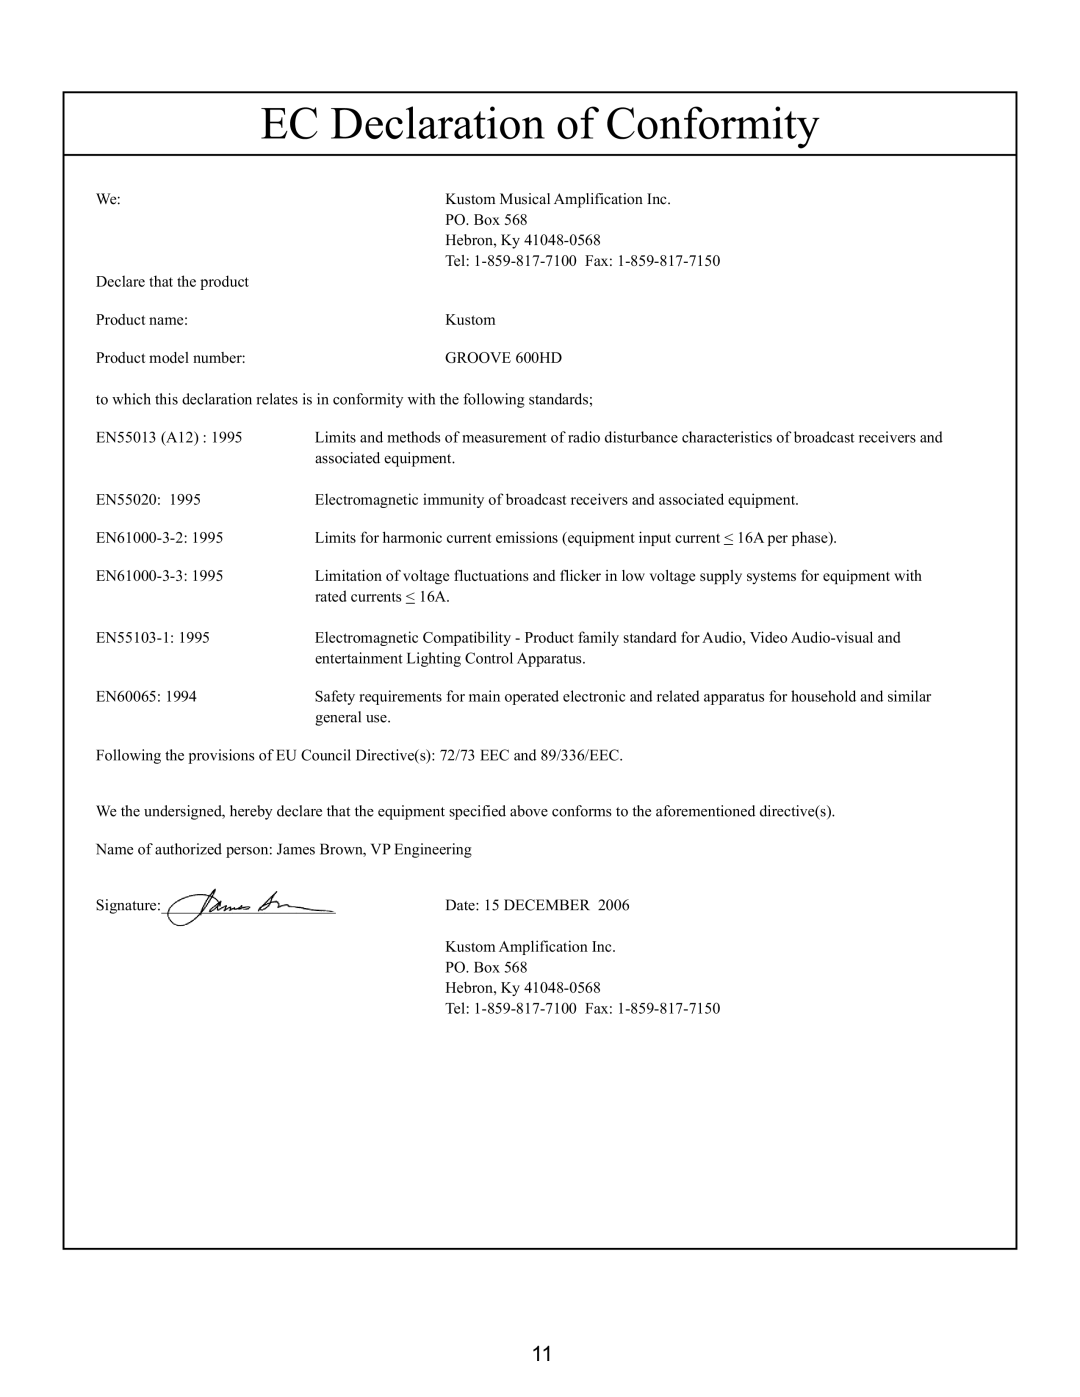 Kustom GROOVE 600TM owner manual EC Declaration of Conformity 